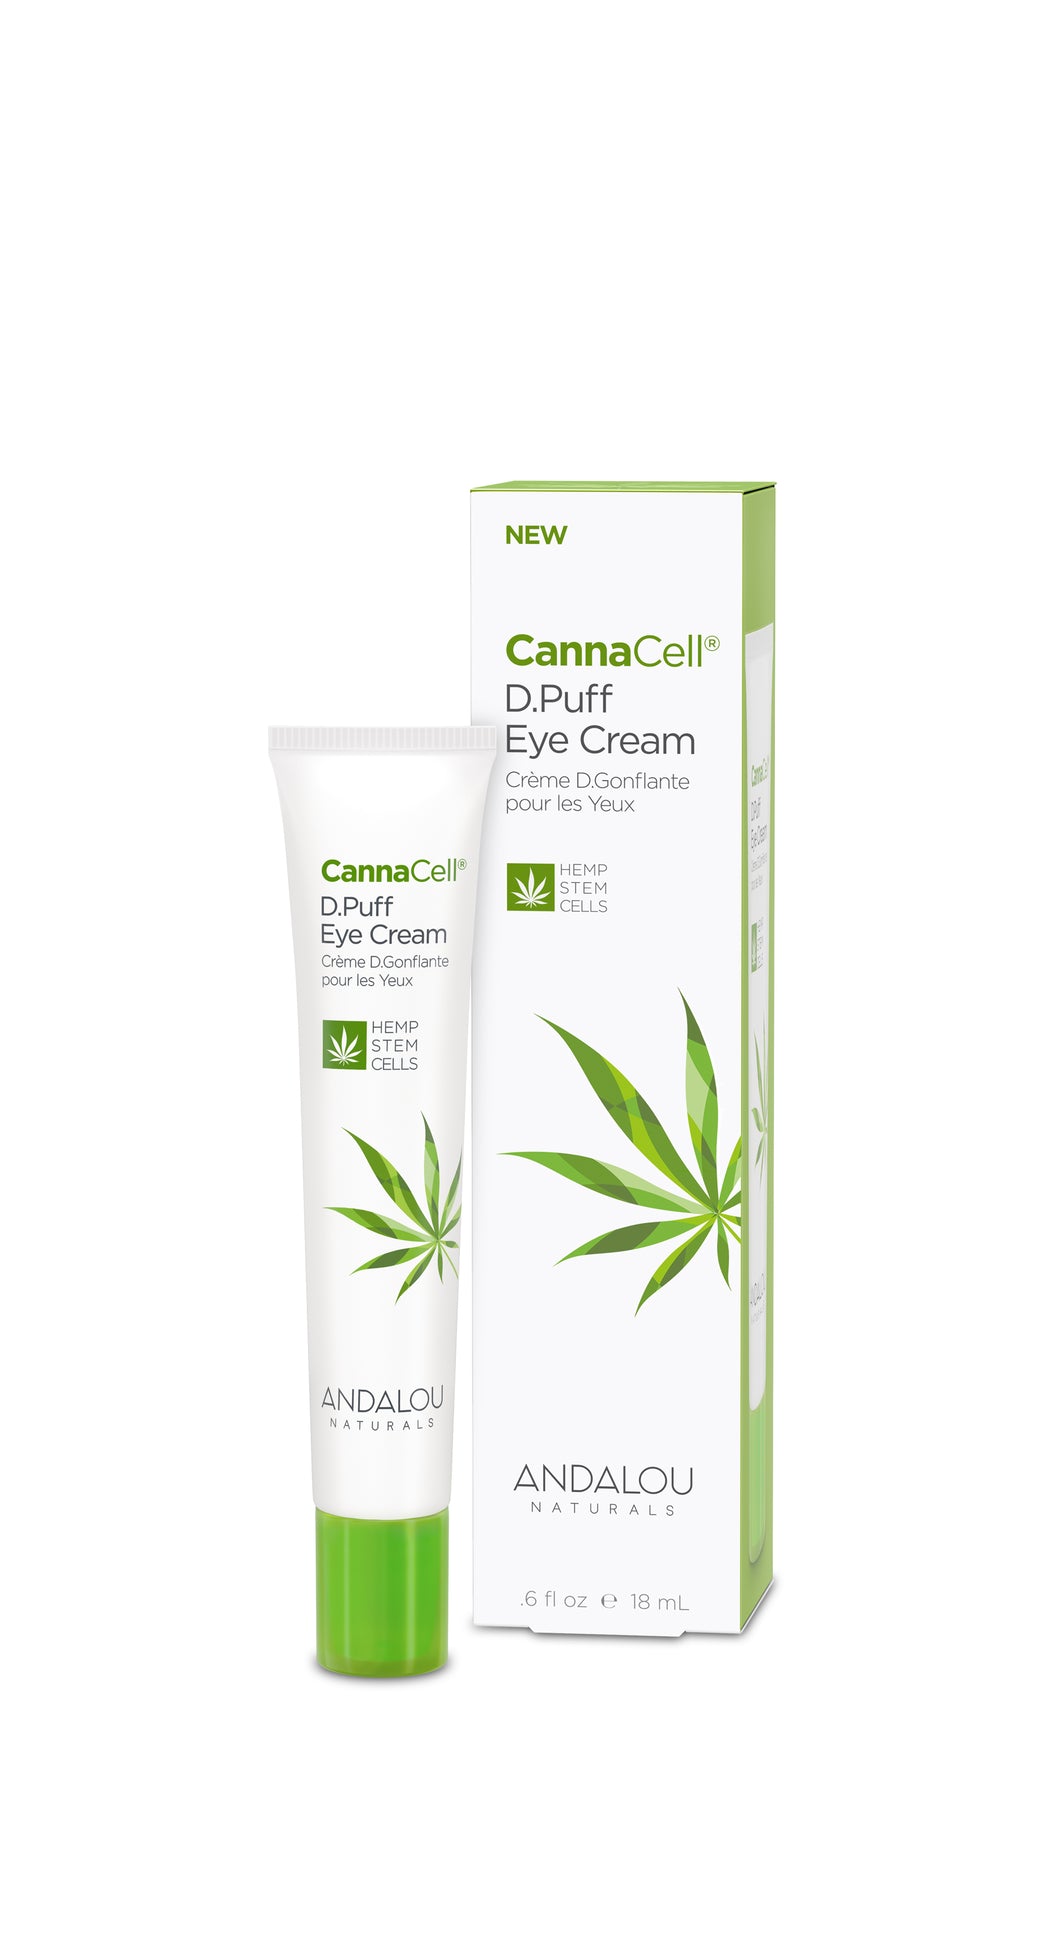 CannaCell® D.Puff Eye Cream